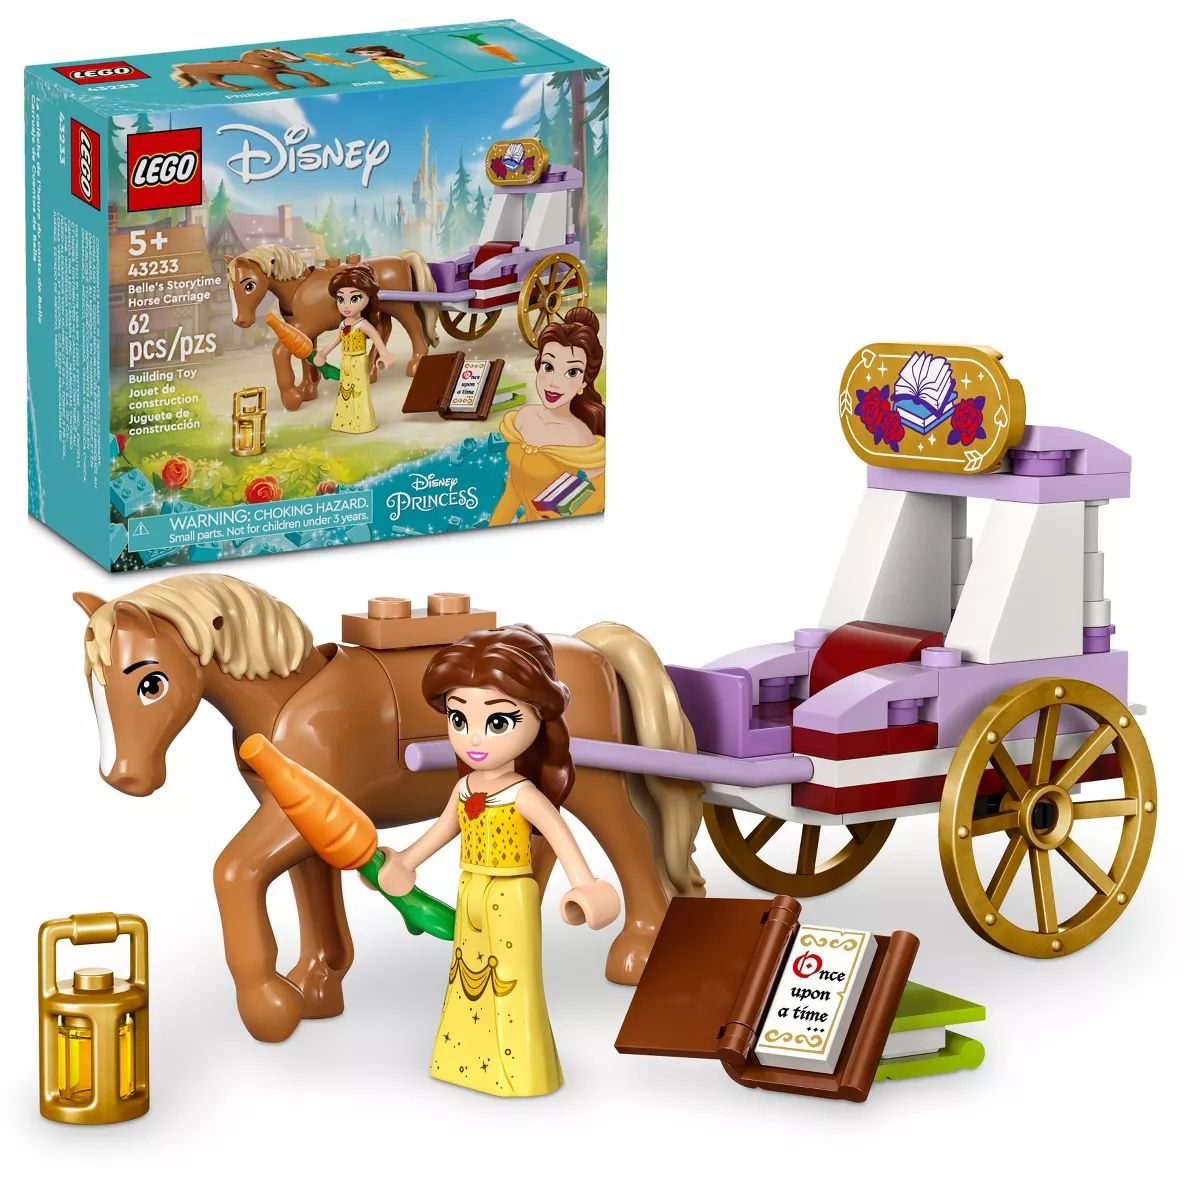 LEGO Disney Princess Belle's Storytime Horse Carriage 43233 | Target